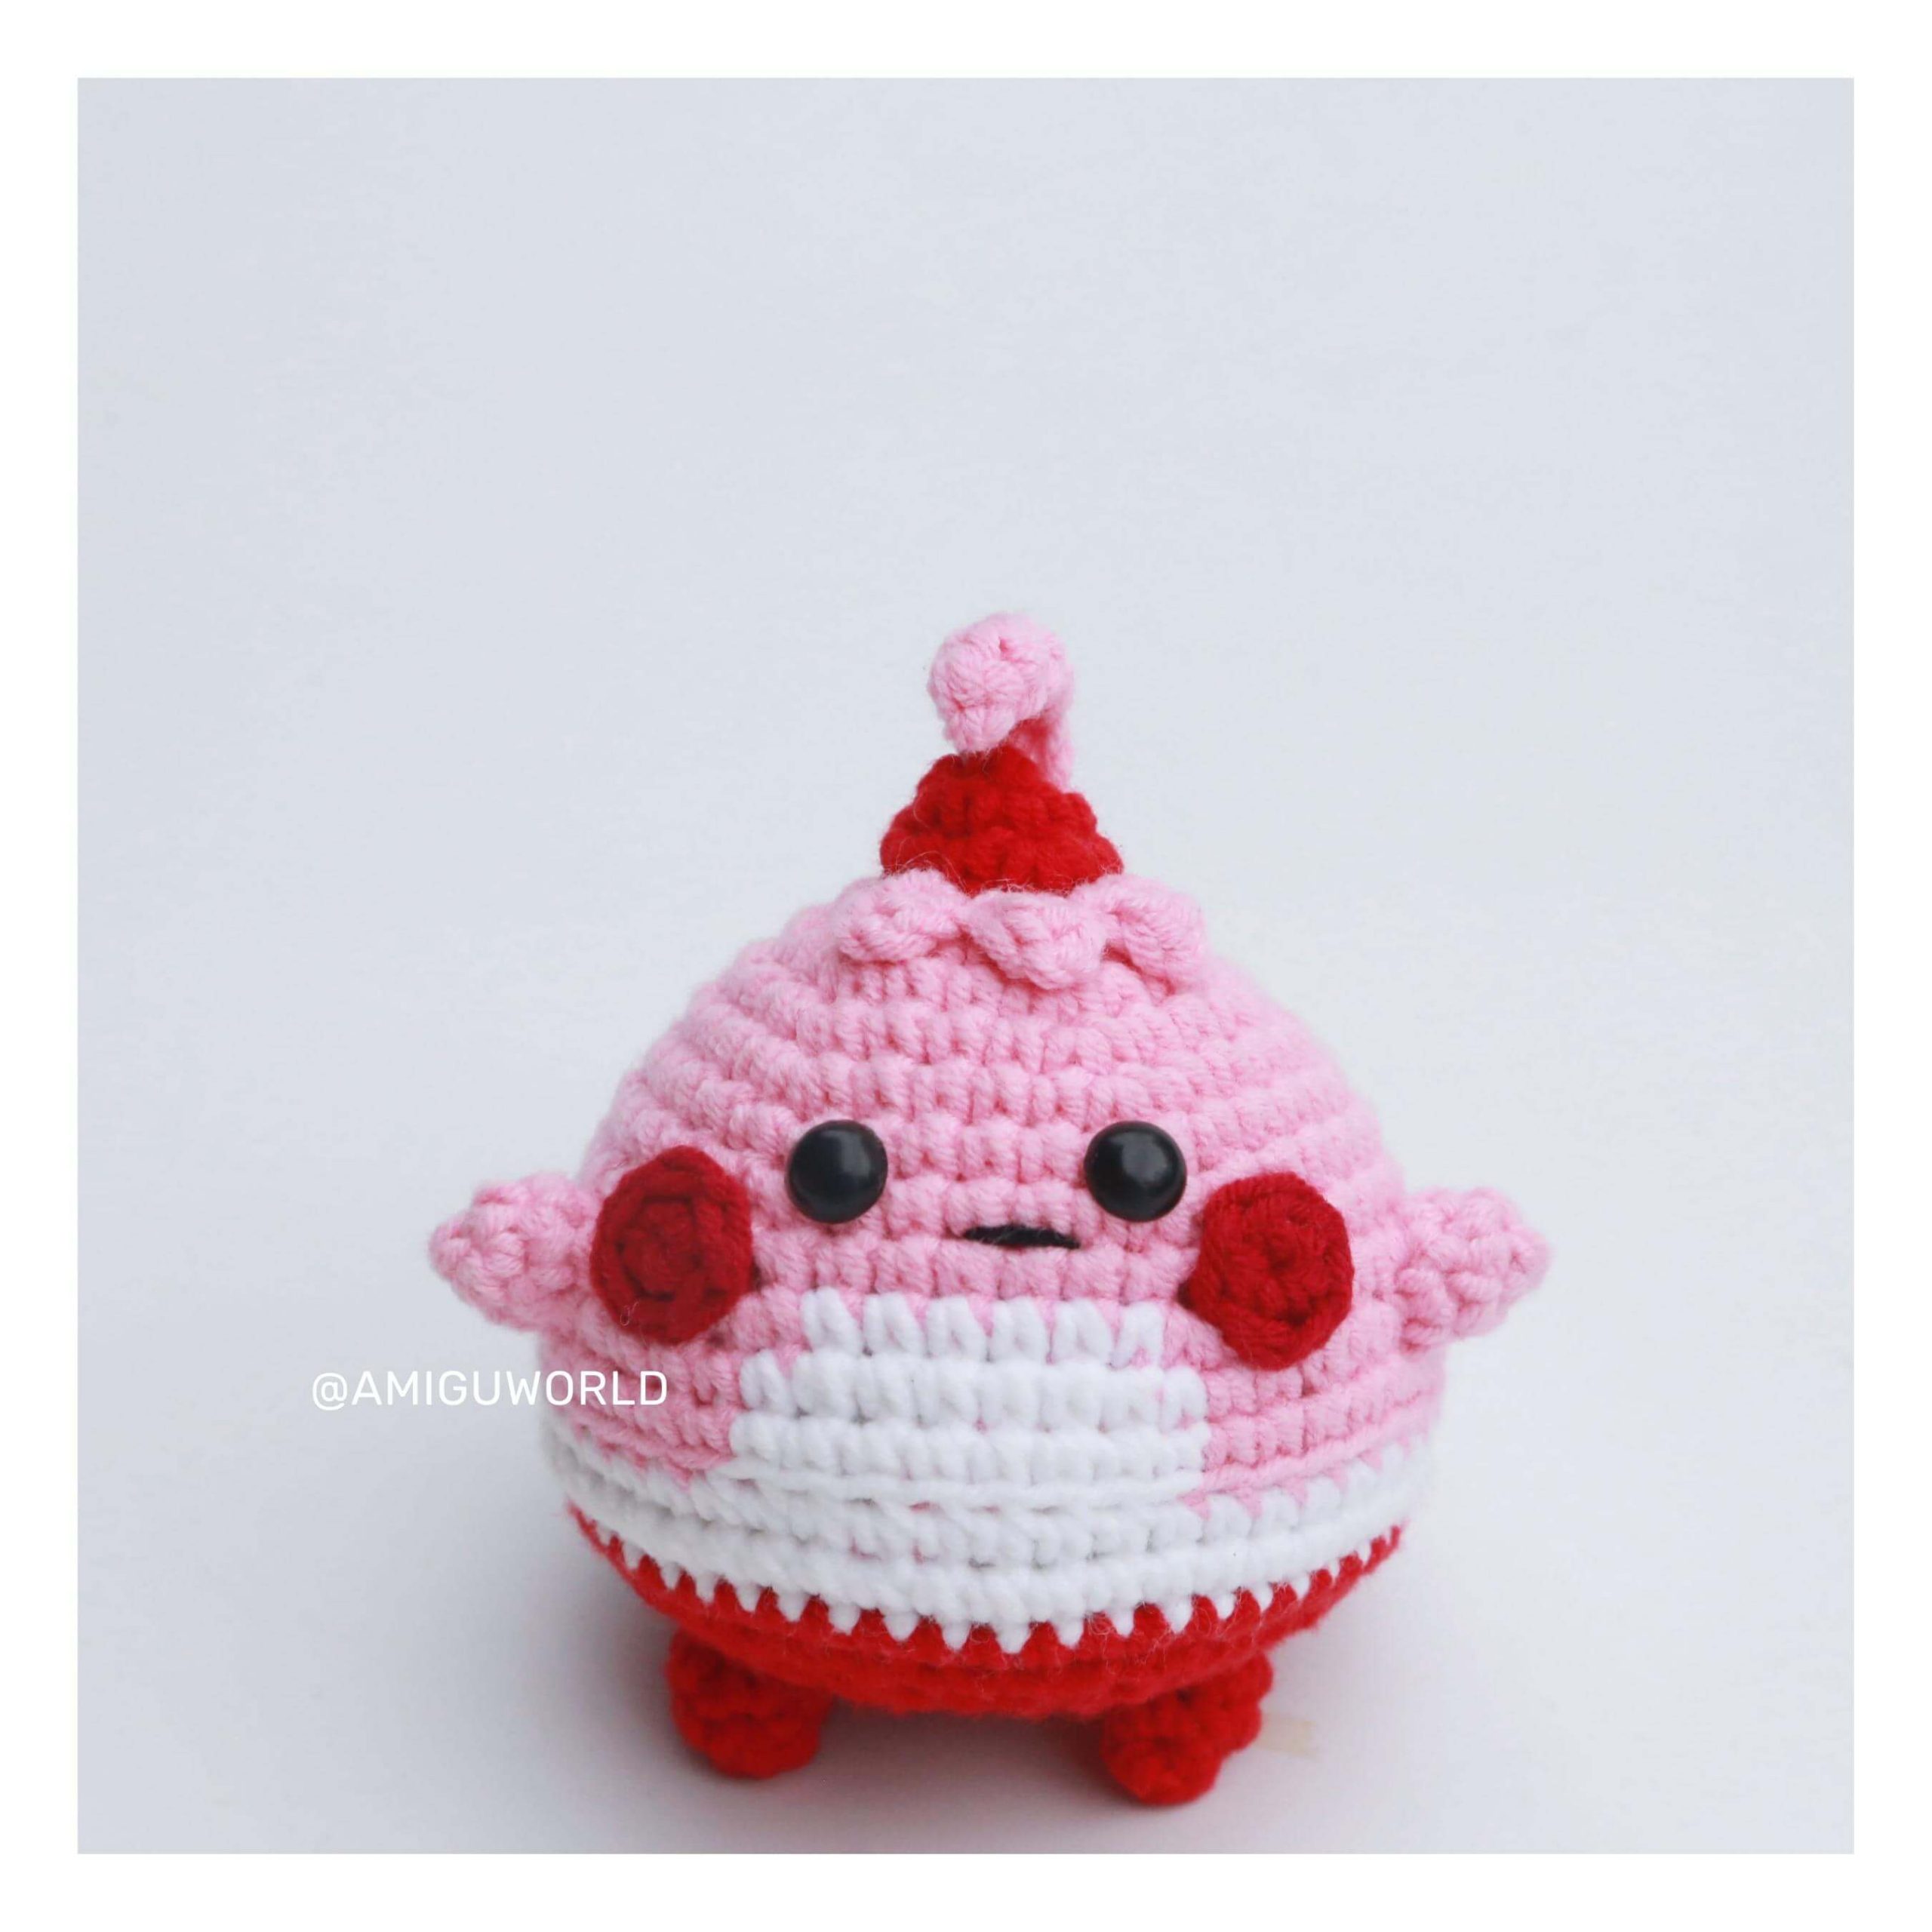 Happiny-amigurumi-crochet-pattern-amiguworld (4)